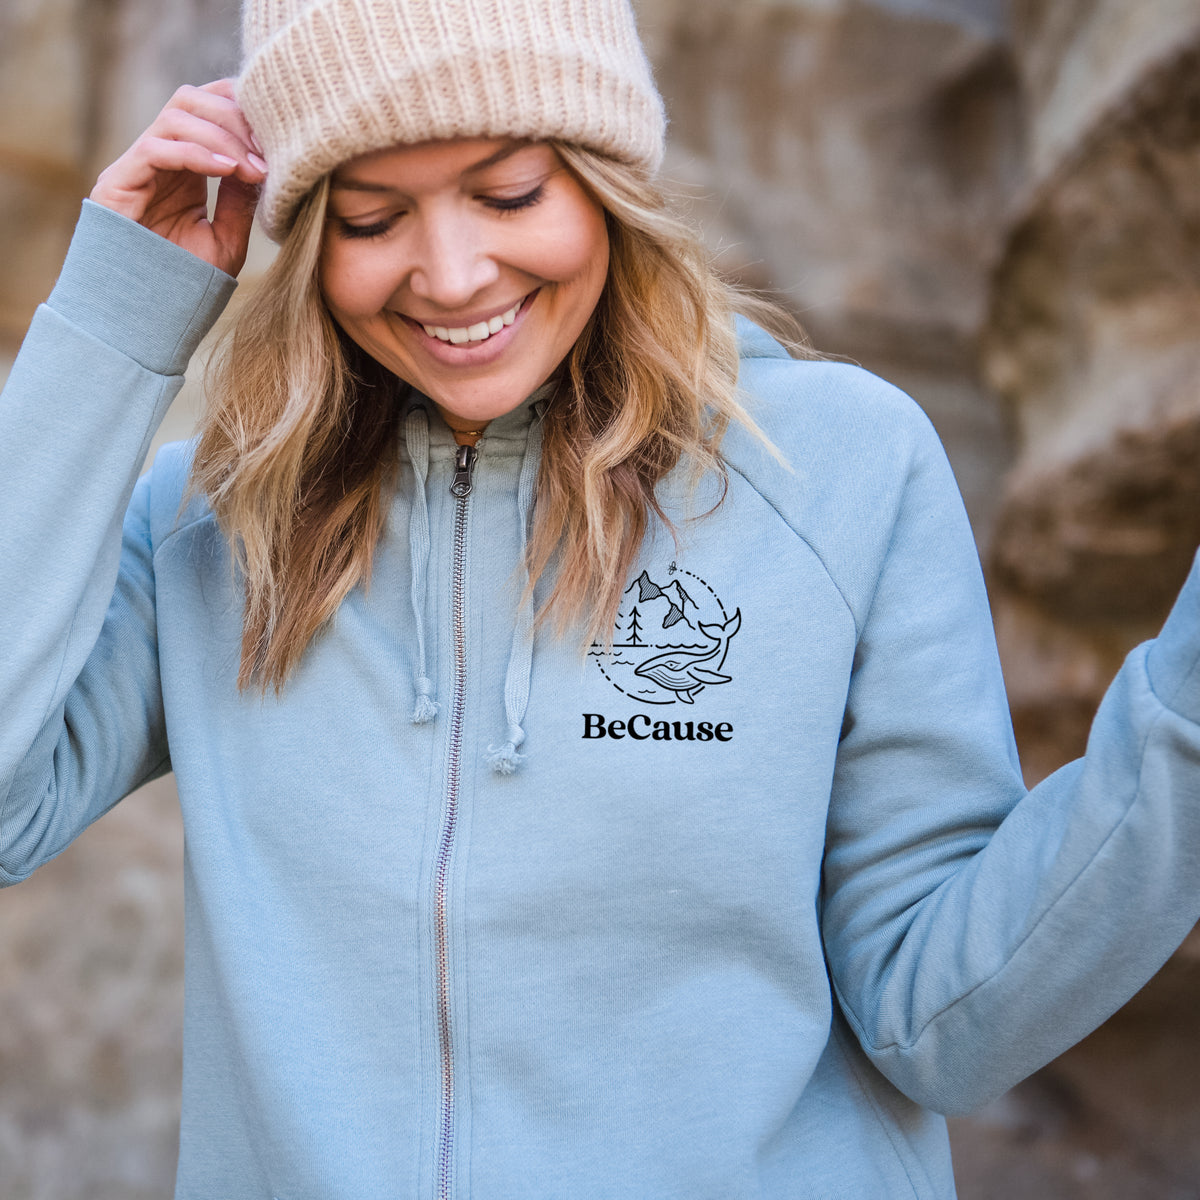 Half Dome - Yosemite National Park - Women&#39;s Cali Wave Zip-Up Sweatshirt